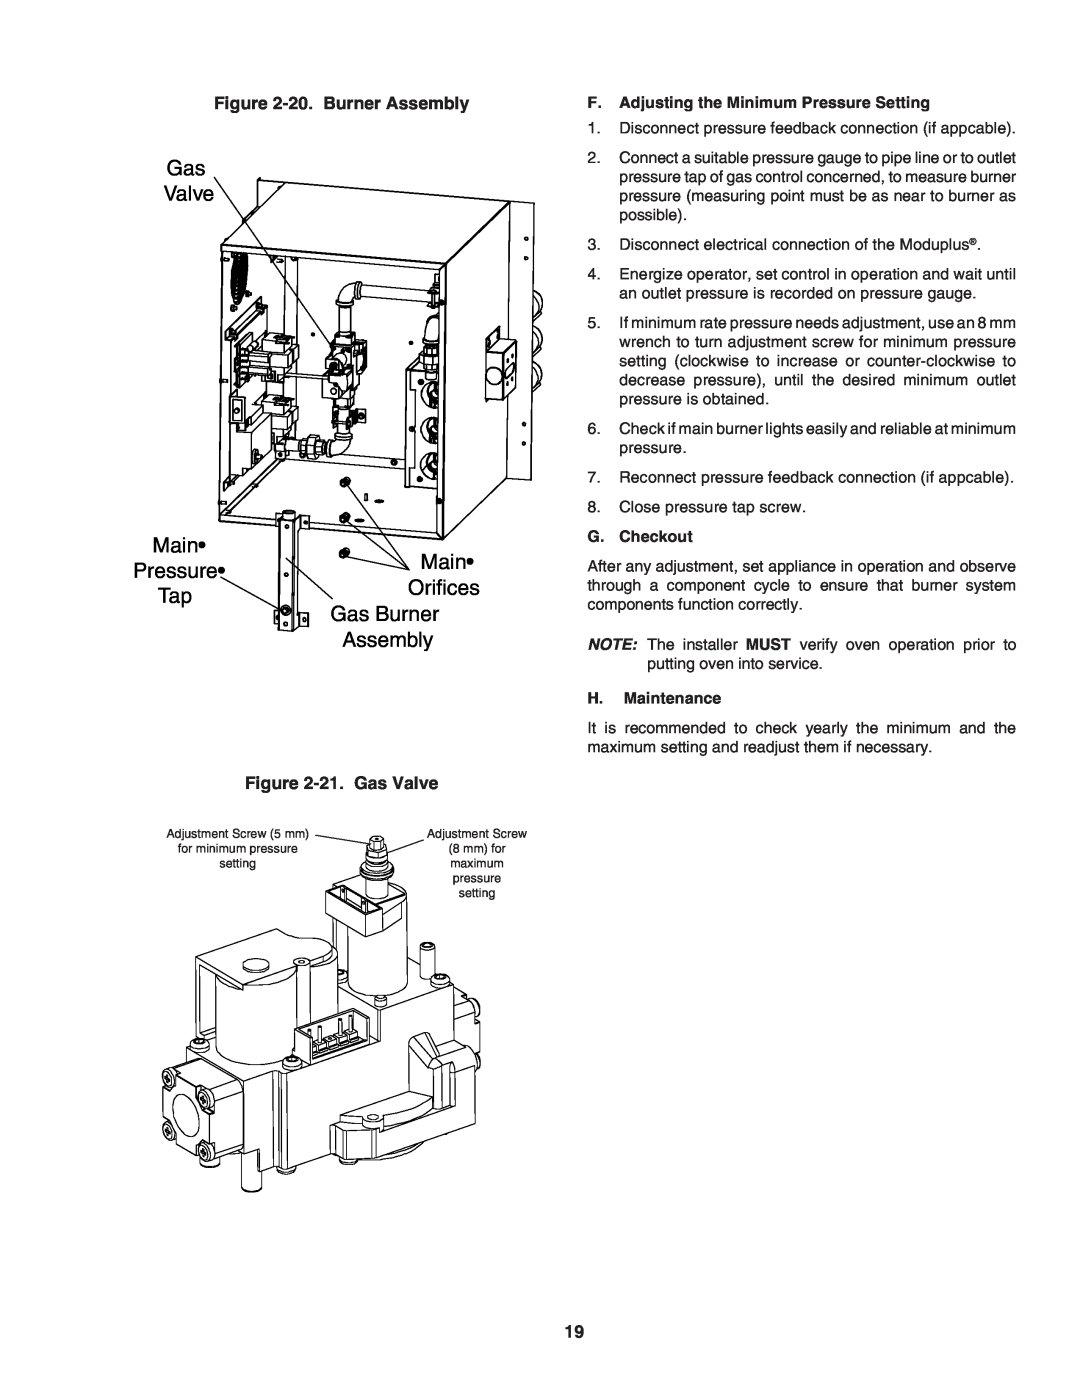 Middleby Marshall PS640 Gas Valve Main PressureMain TapOrifices Gas Burner Assembly, 20. Burner Assembly, 21. Gas Valve 